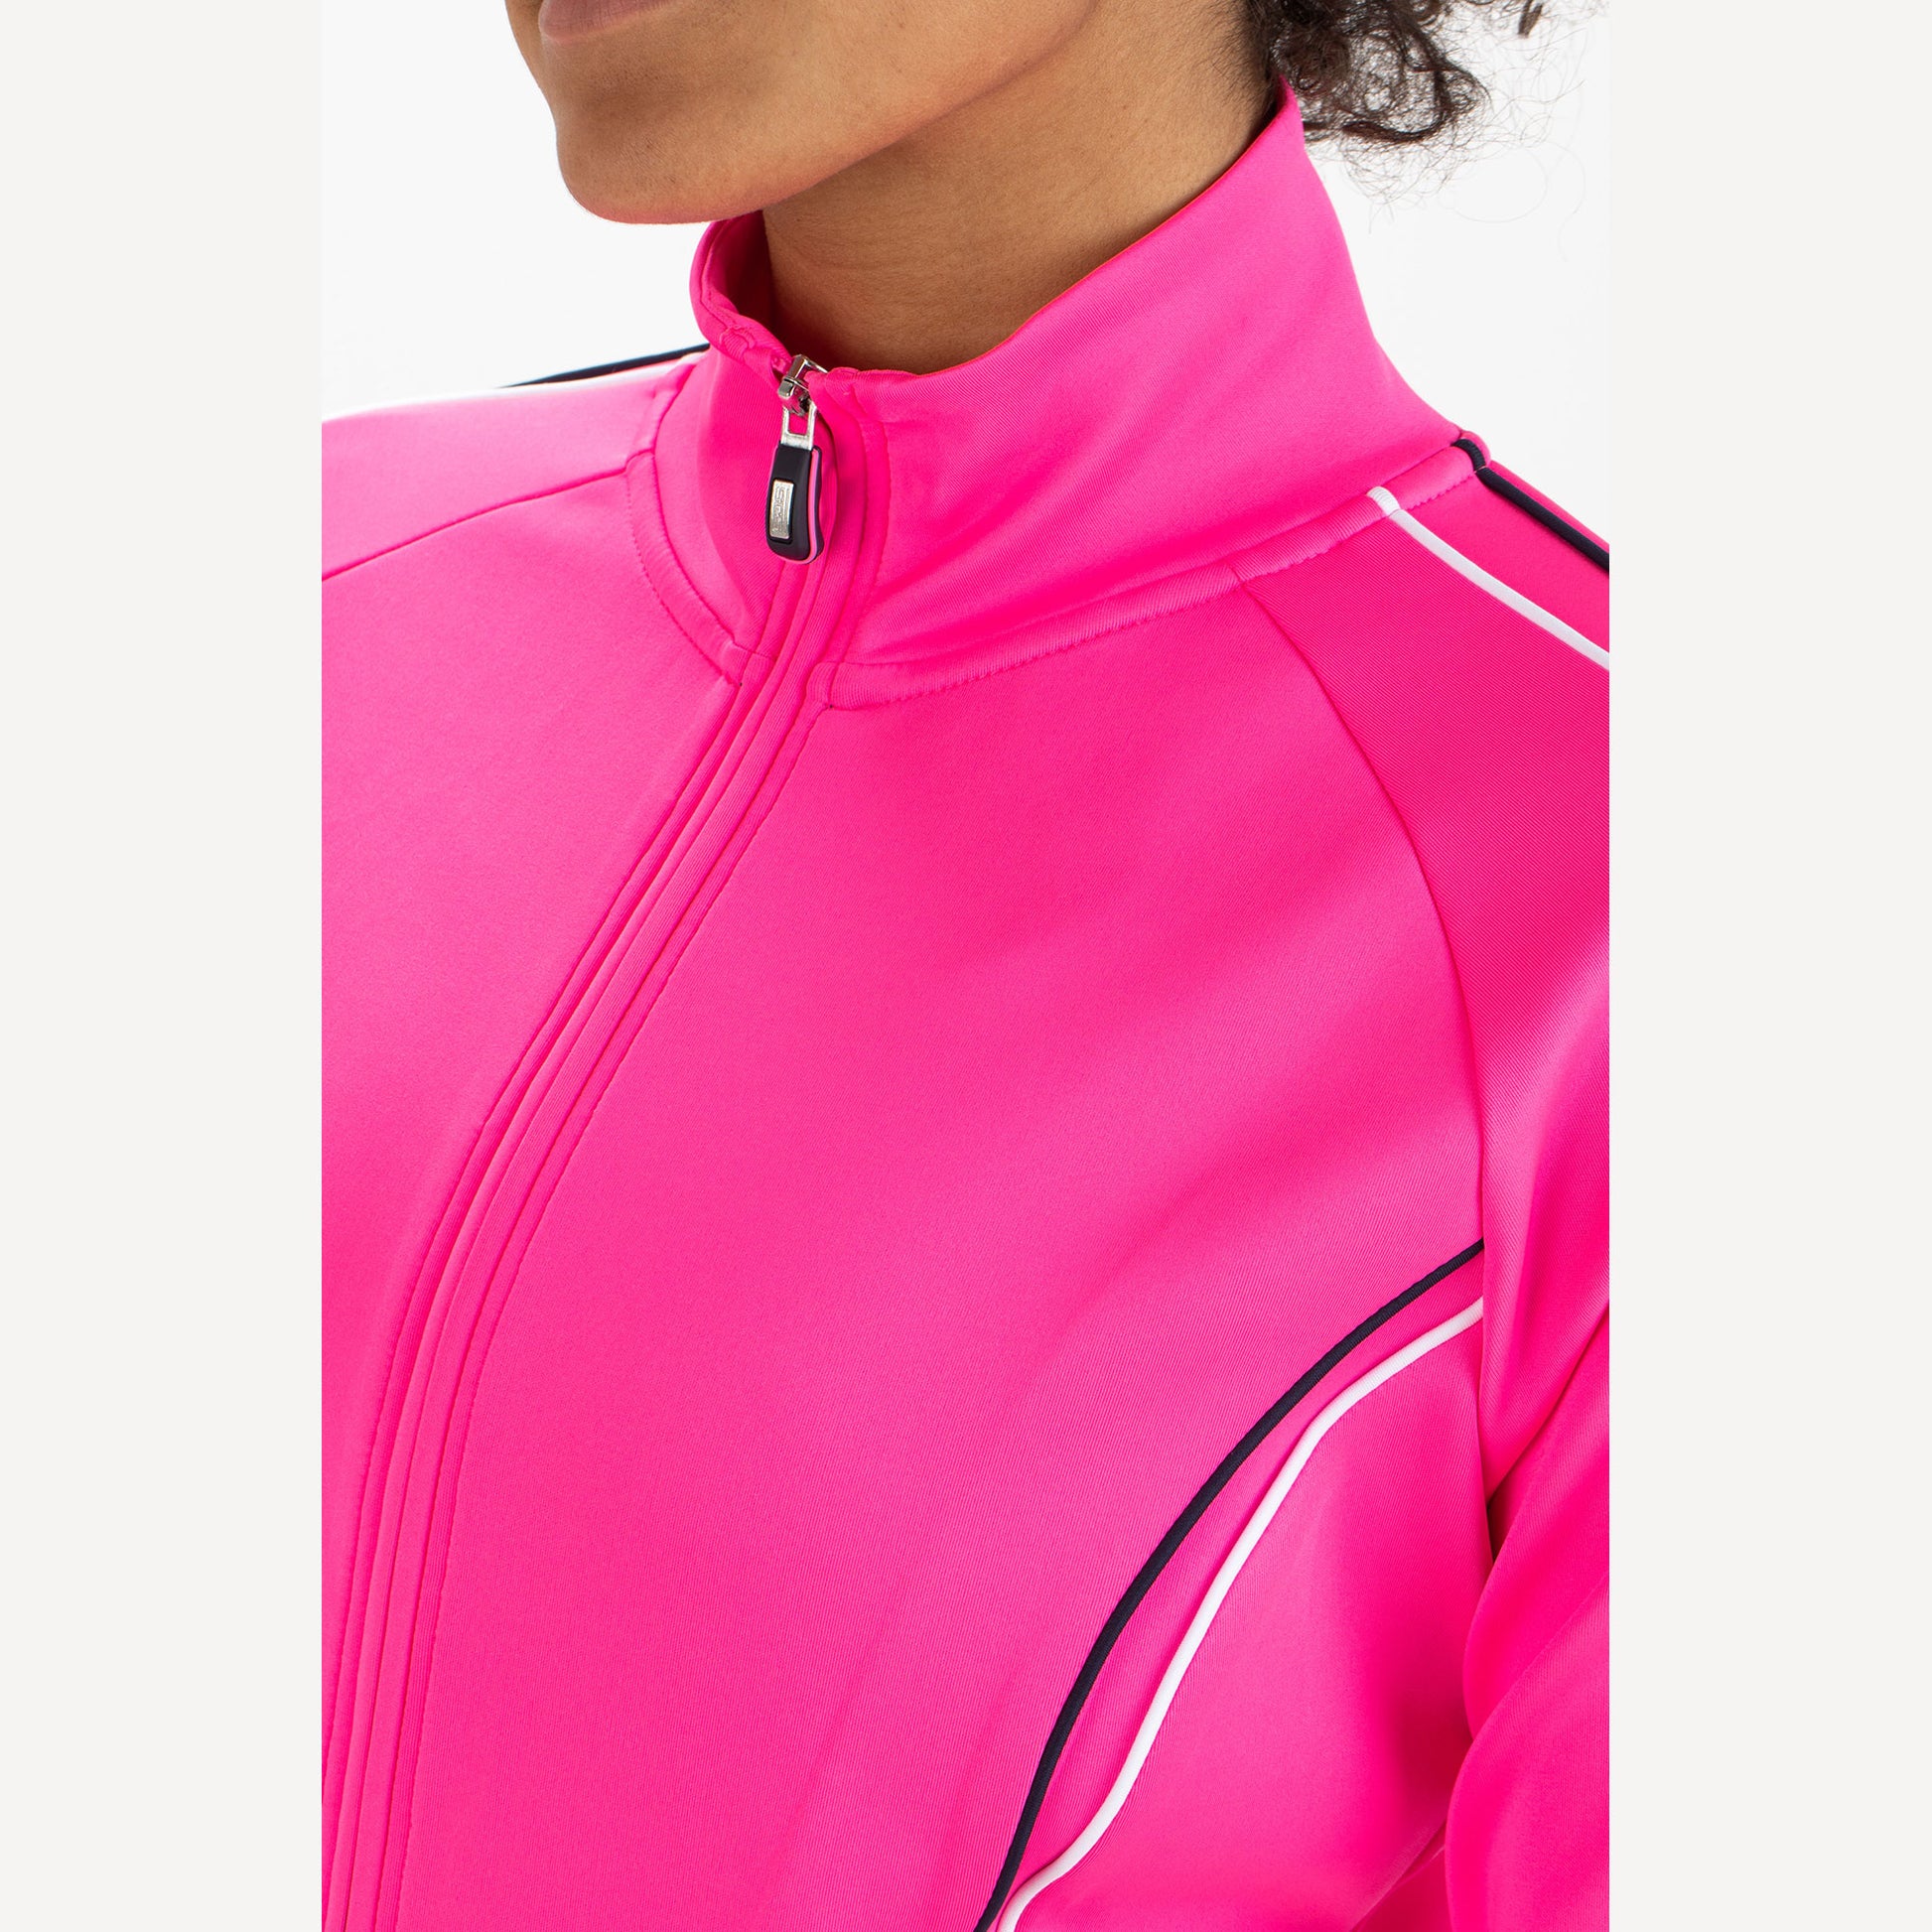 Sjeng Sports Aline Women's Tennis Jacket Pink (4)